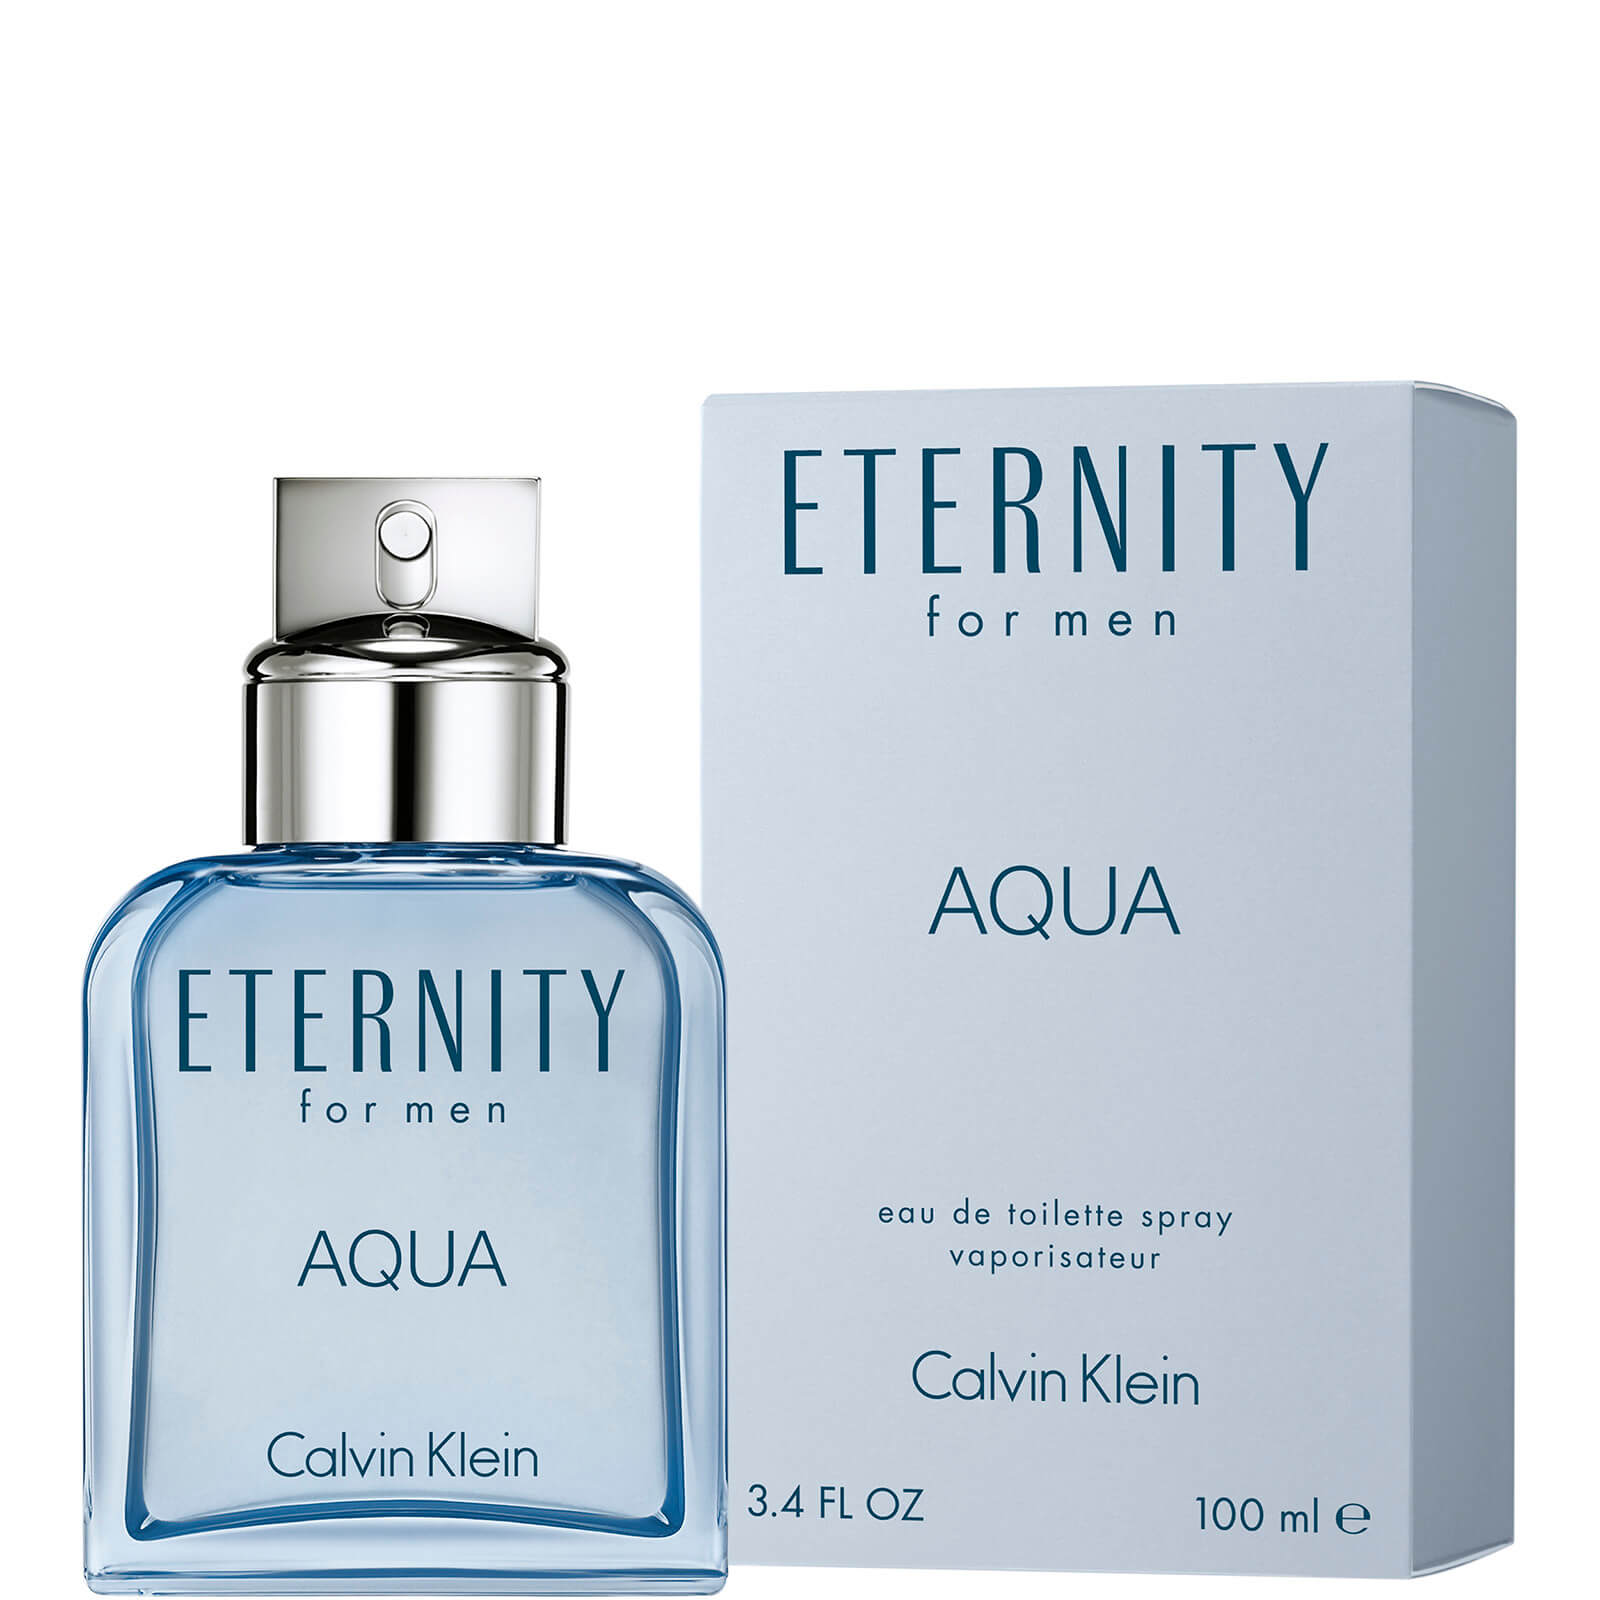 Calvin Klein Eternity for Men Aqua Eau de Toilette Spray von Calvin Klein